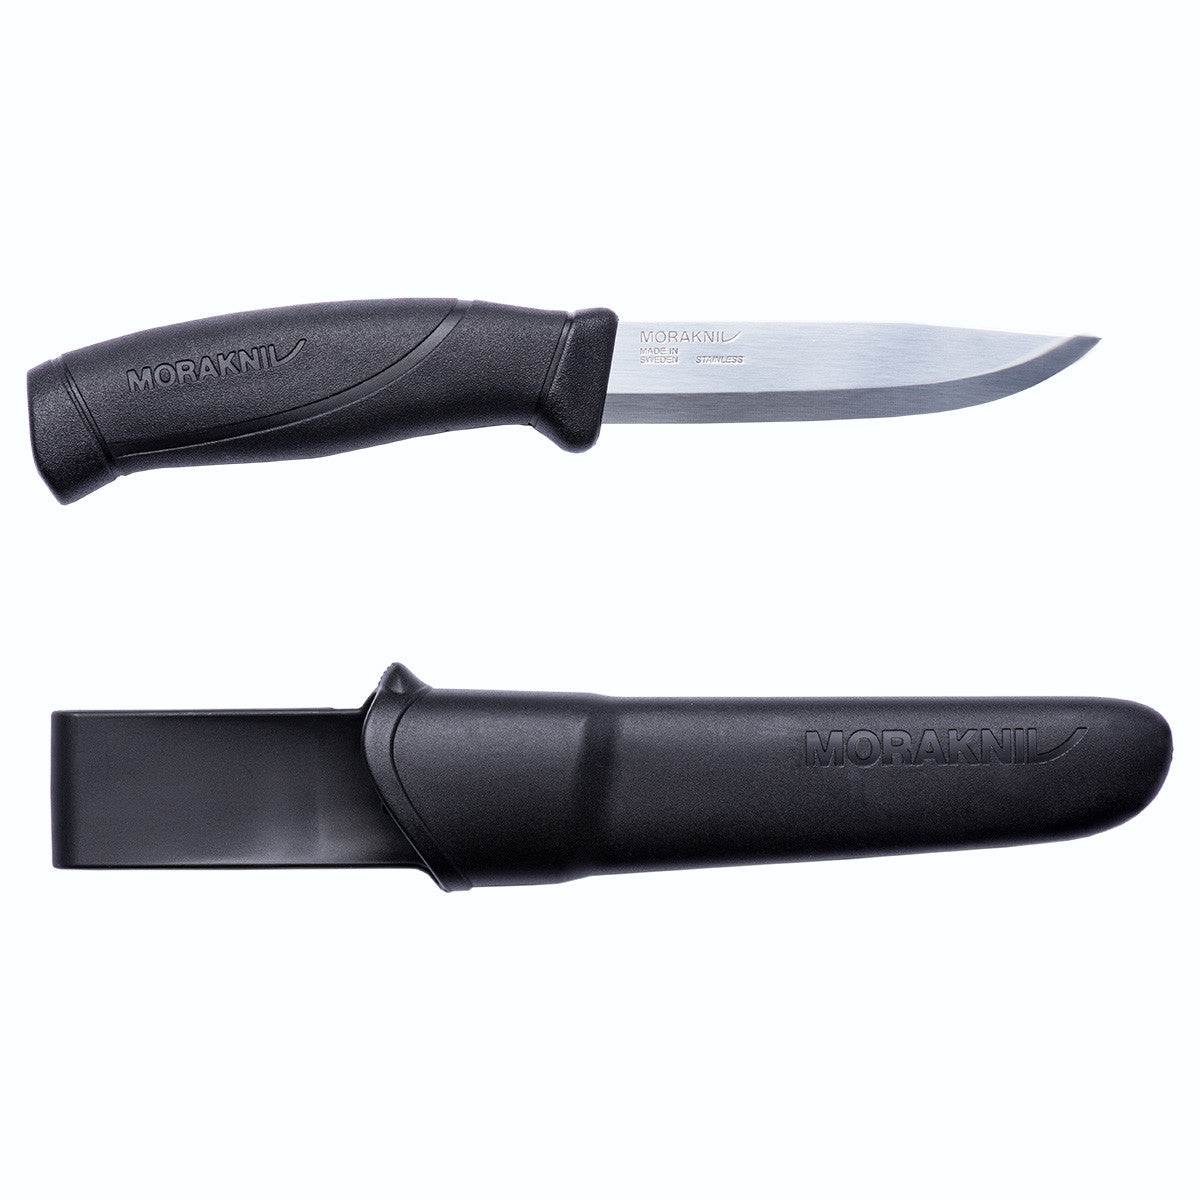 Morakniv Morakniv Companion Black Outdoor Sports Knife with Clam Sheath - BNR Industrial